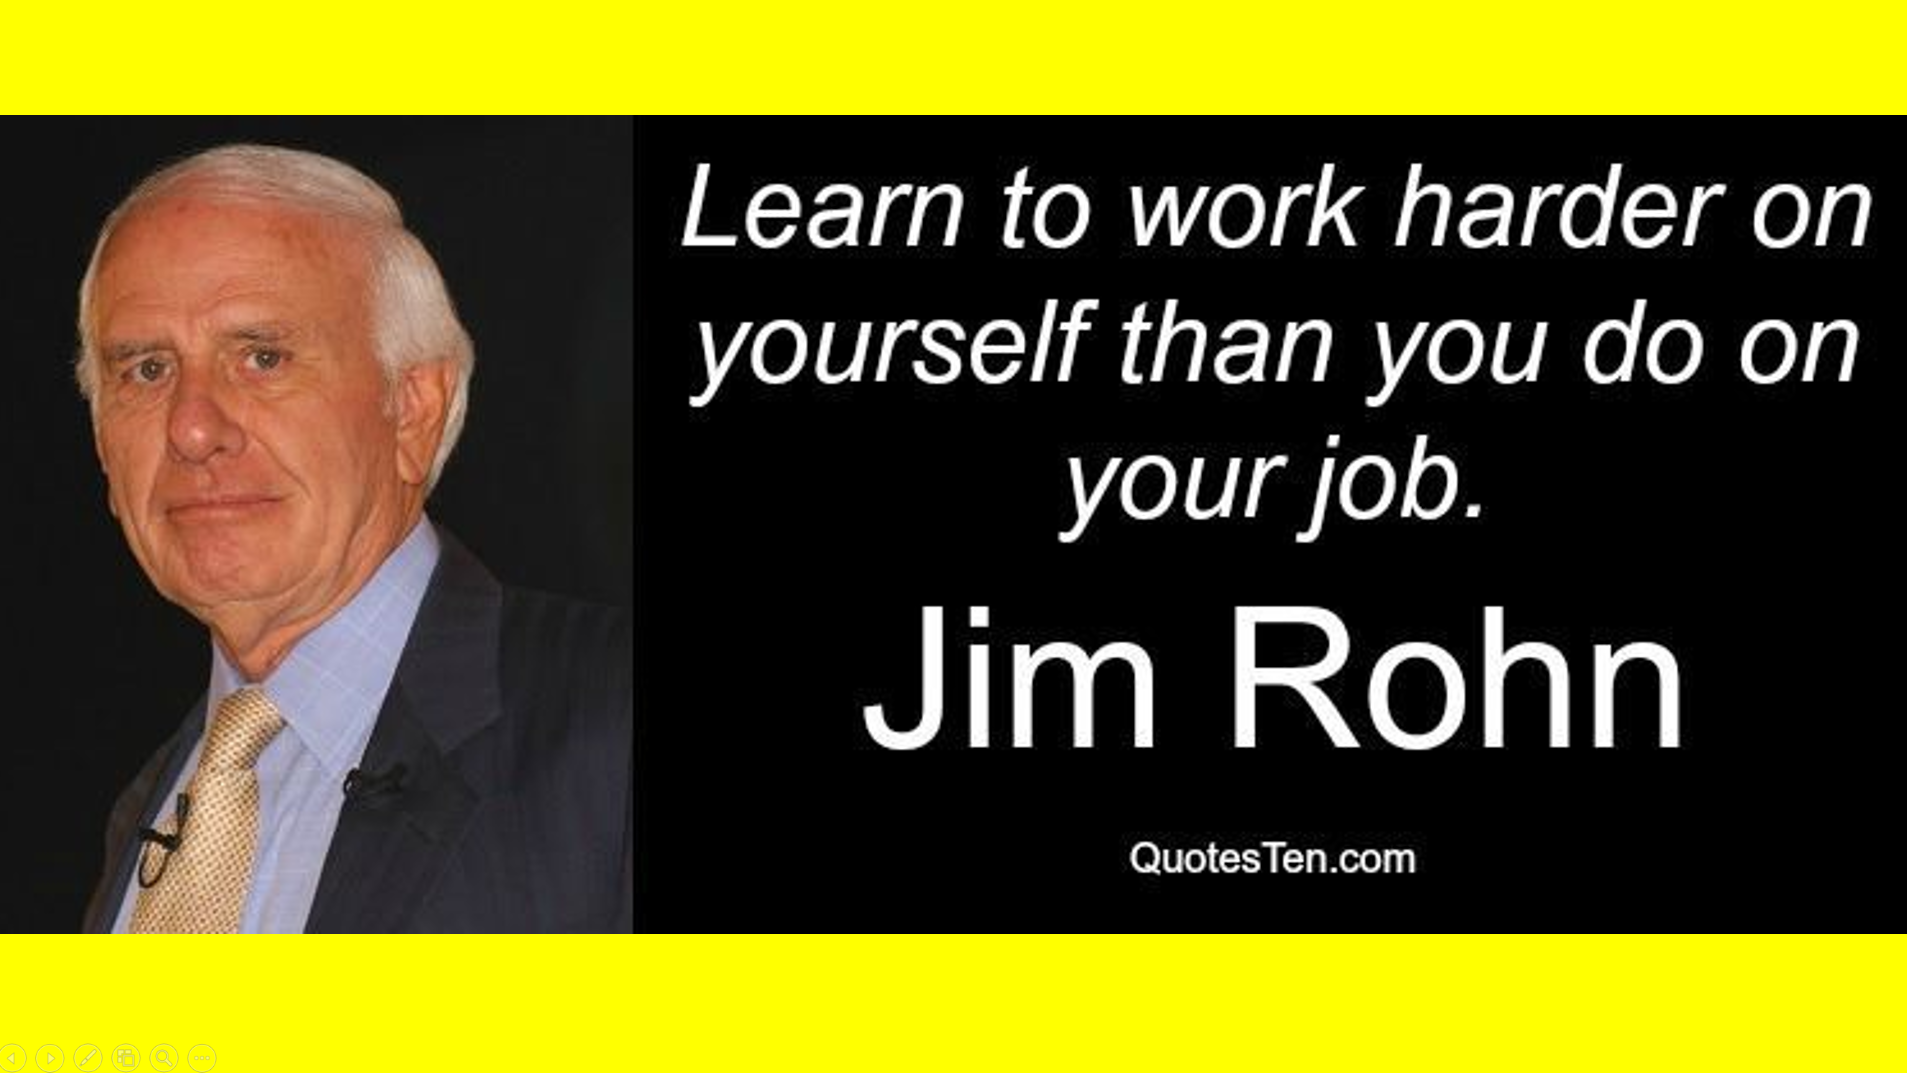 Jim Rohn: Short Biography & Success Lessons